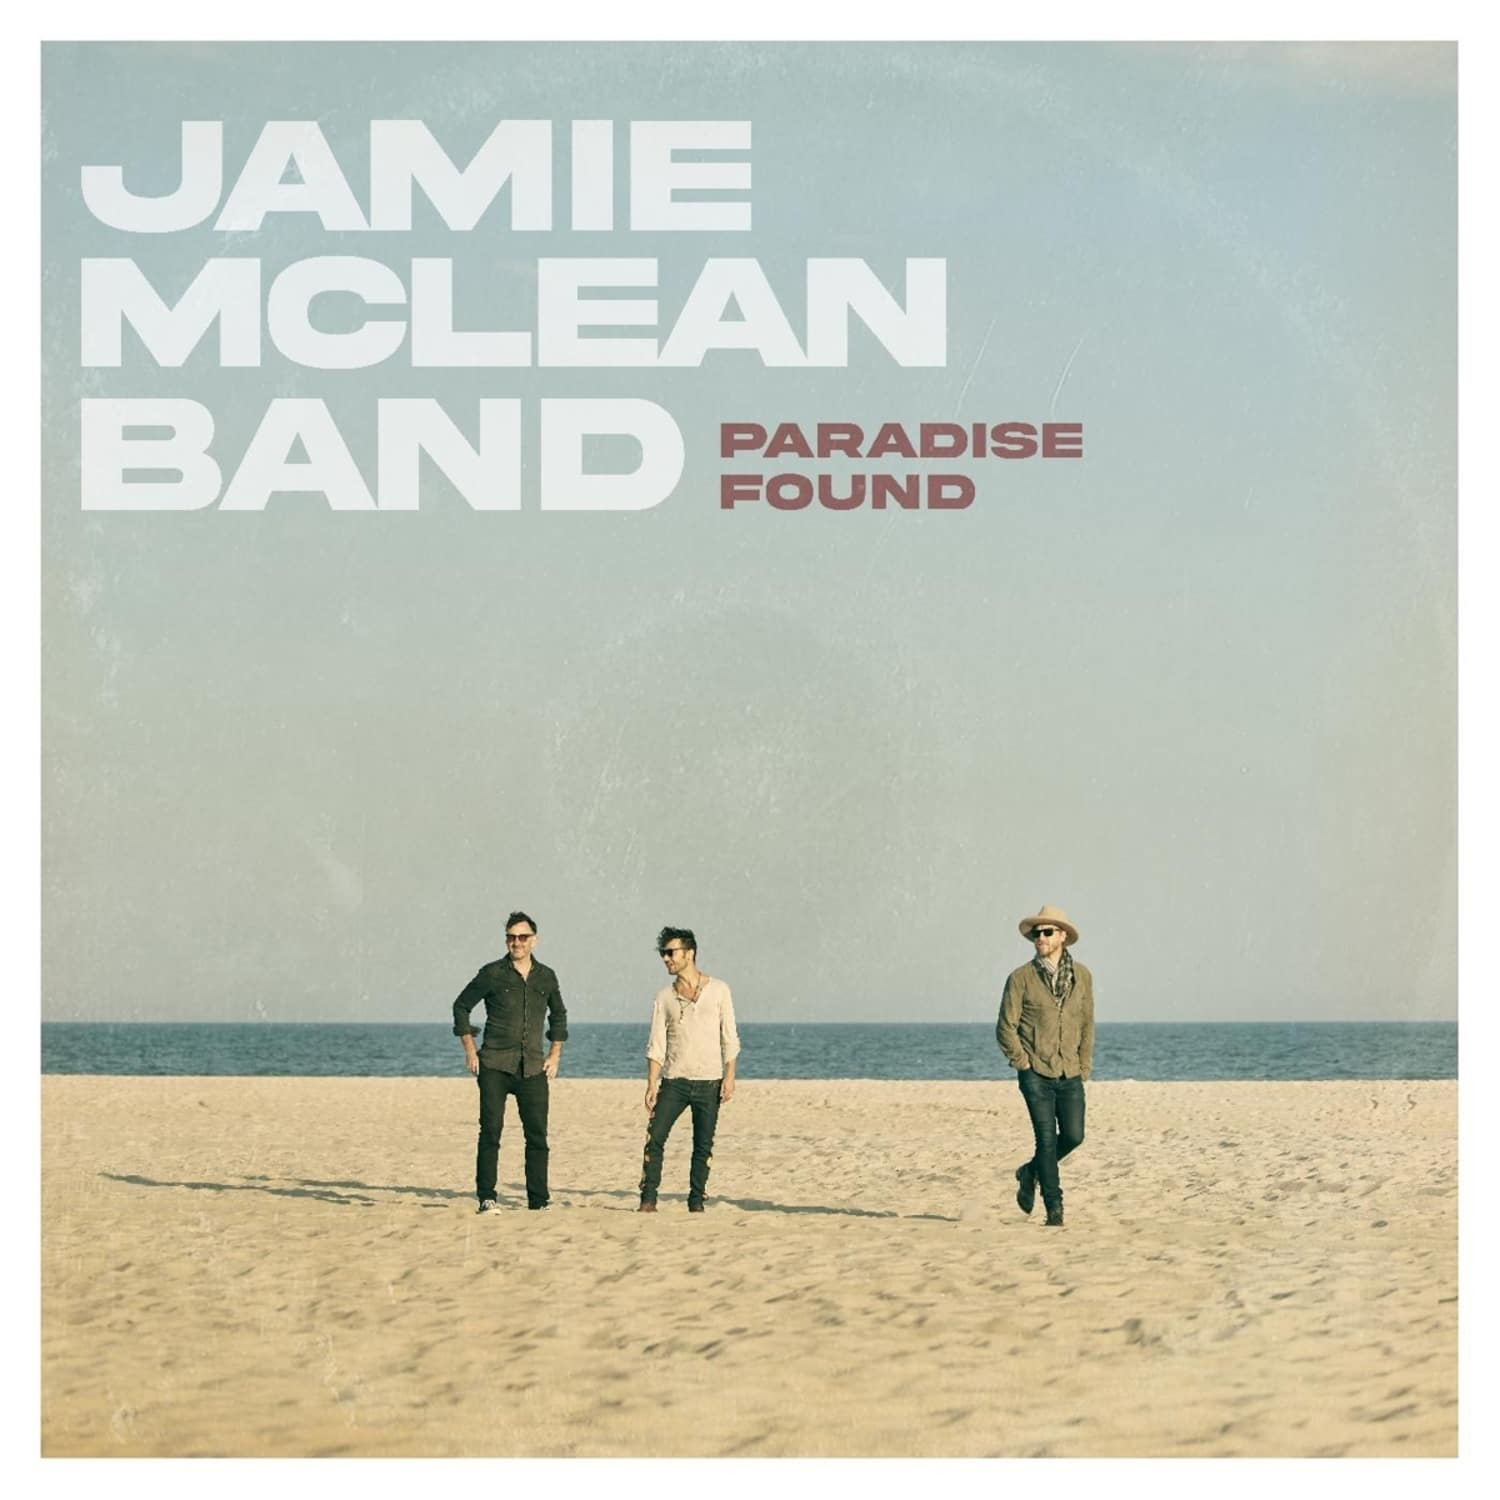  Jamie-Band- McLean - PARADISE FOUND 